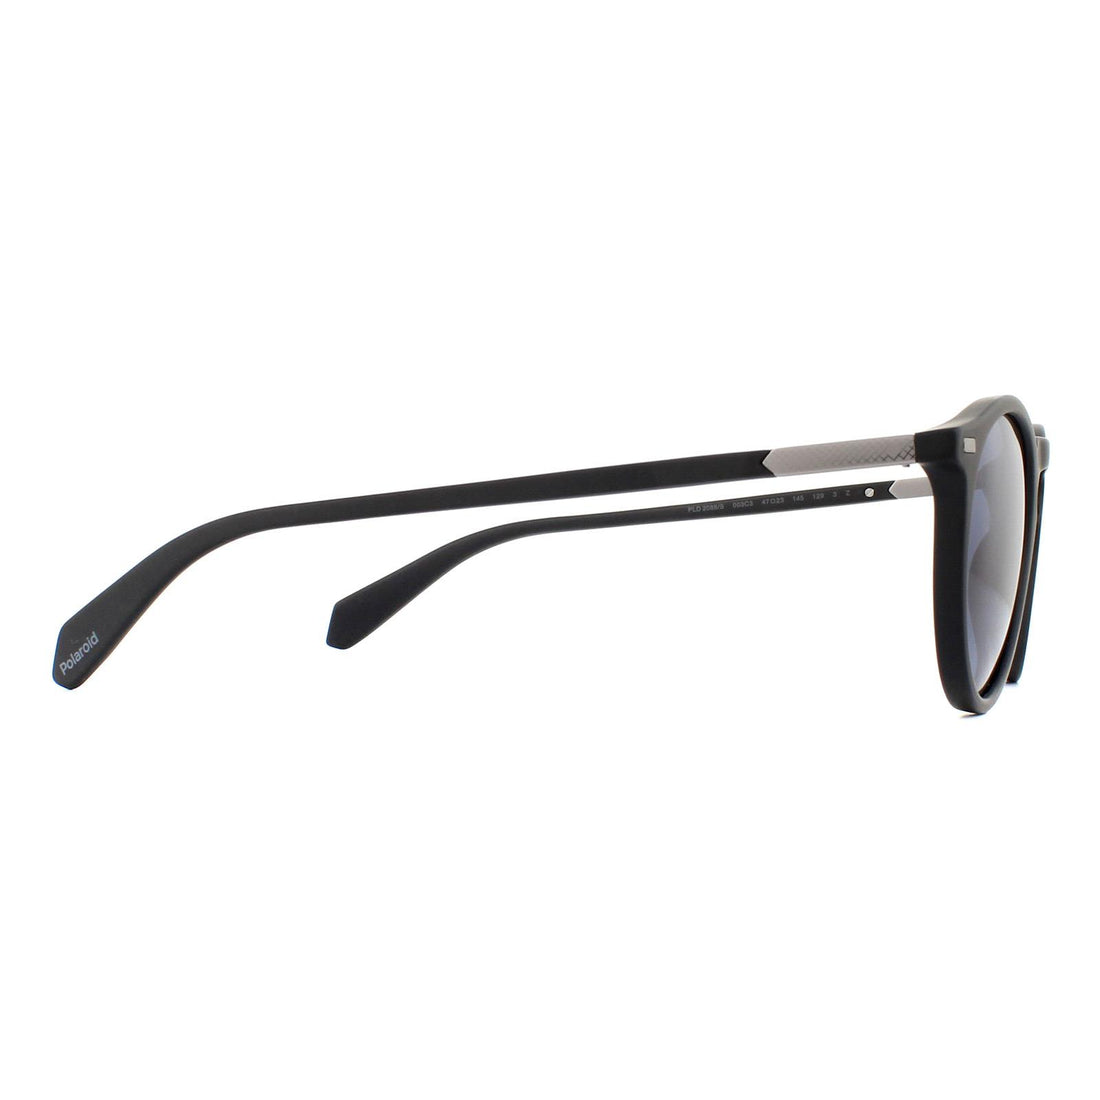 Polaroid Sunglasses PLD 2086/S 003 C3 Matte Black Grey Polarized